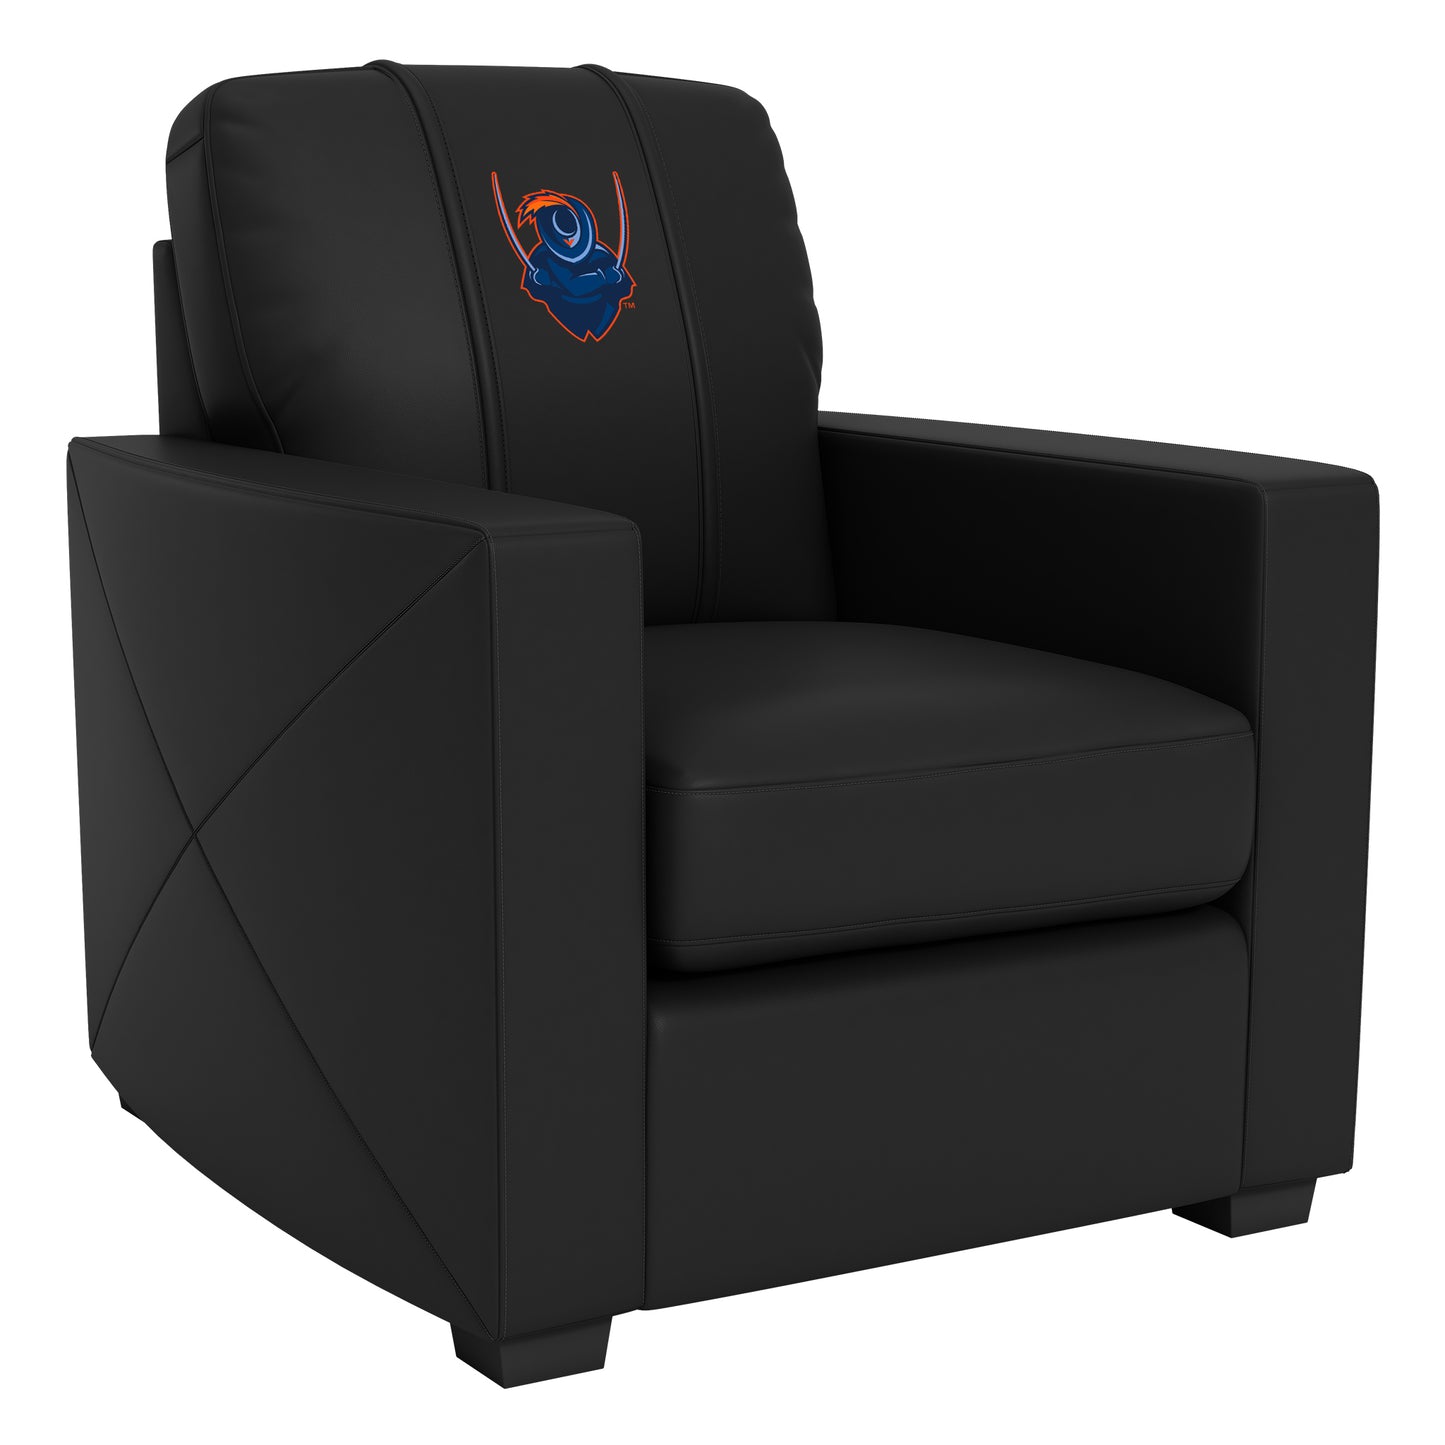 Silver Club Chair with Virginia Cavaliers Alternate Logo